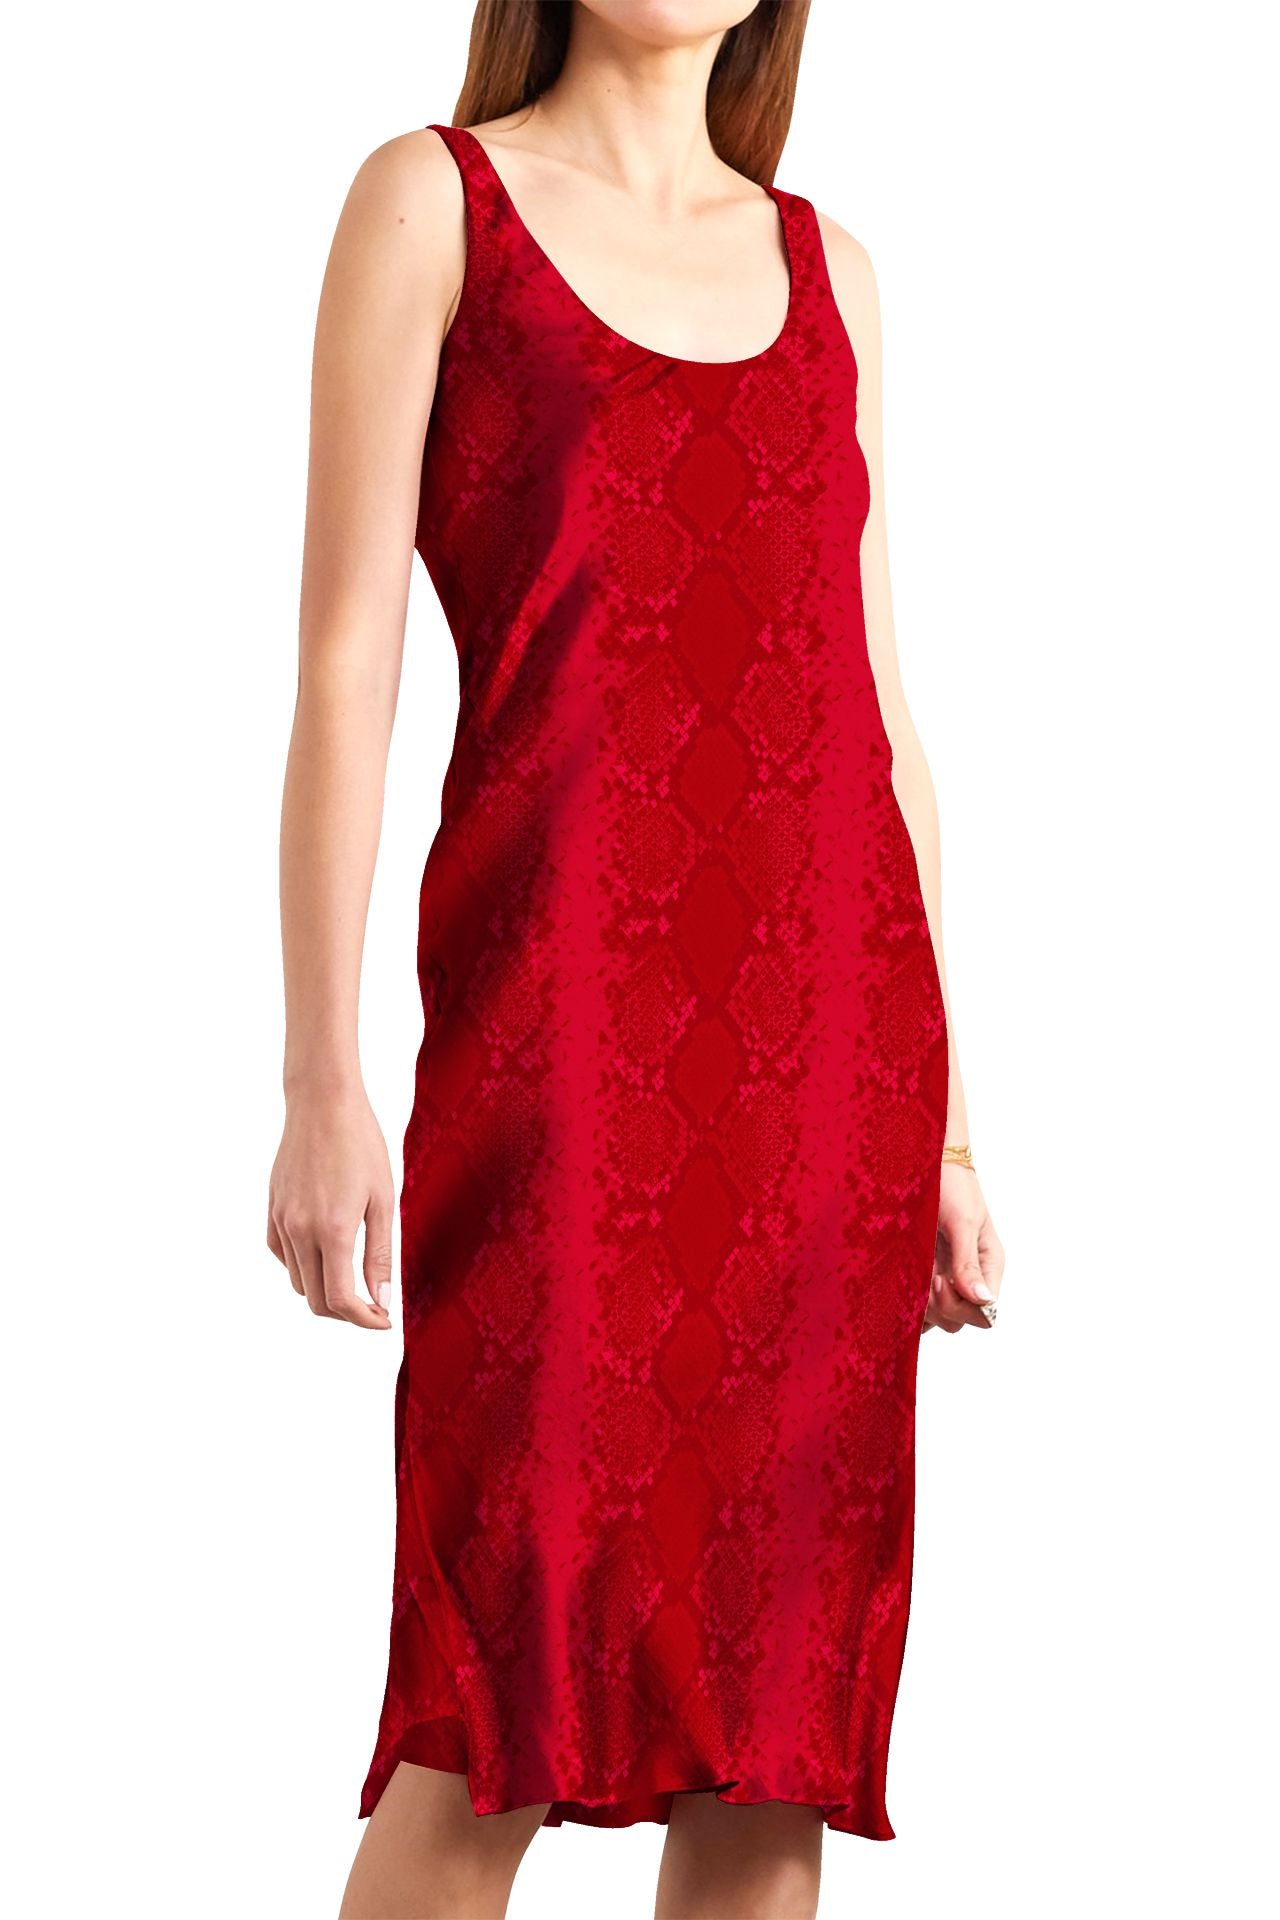 Midi Length Cami Dress in Blood Stone